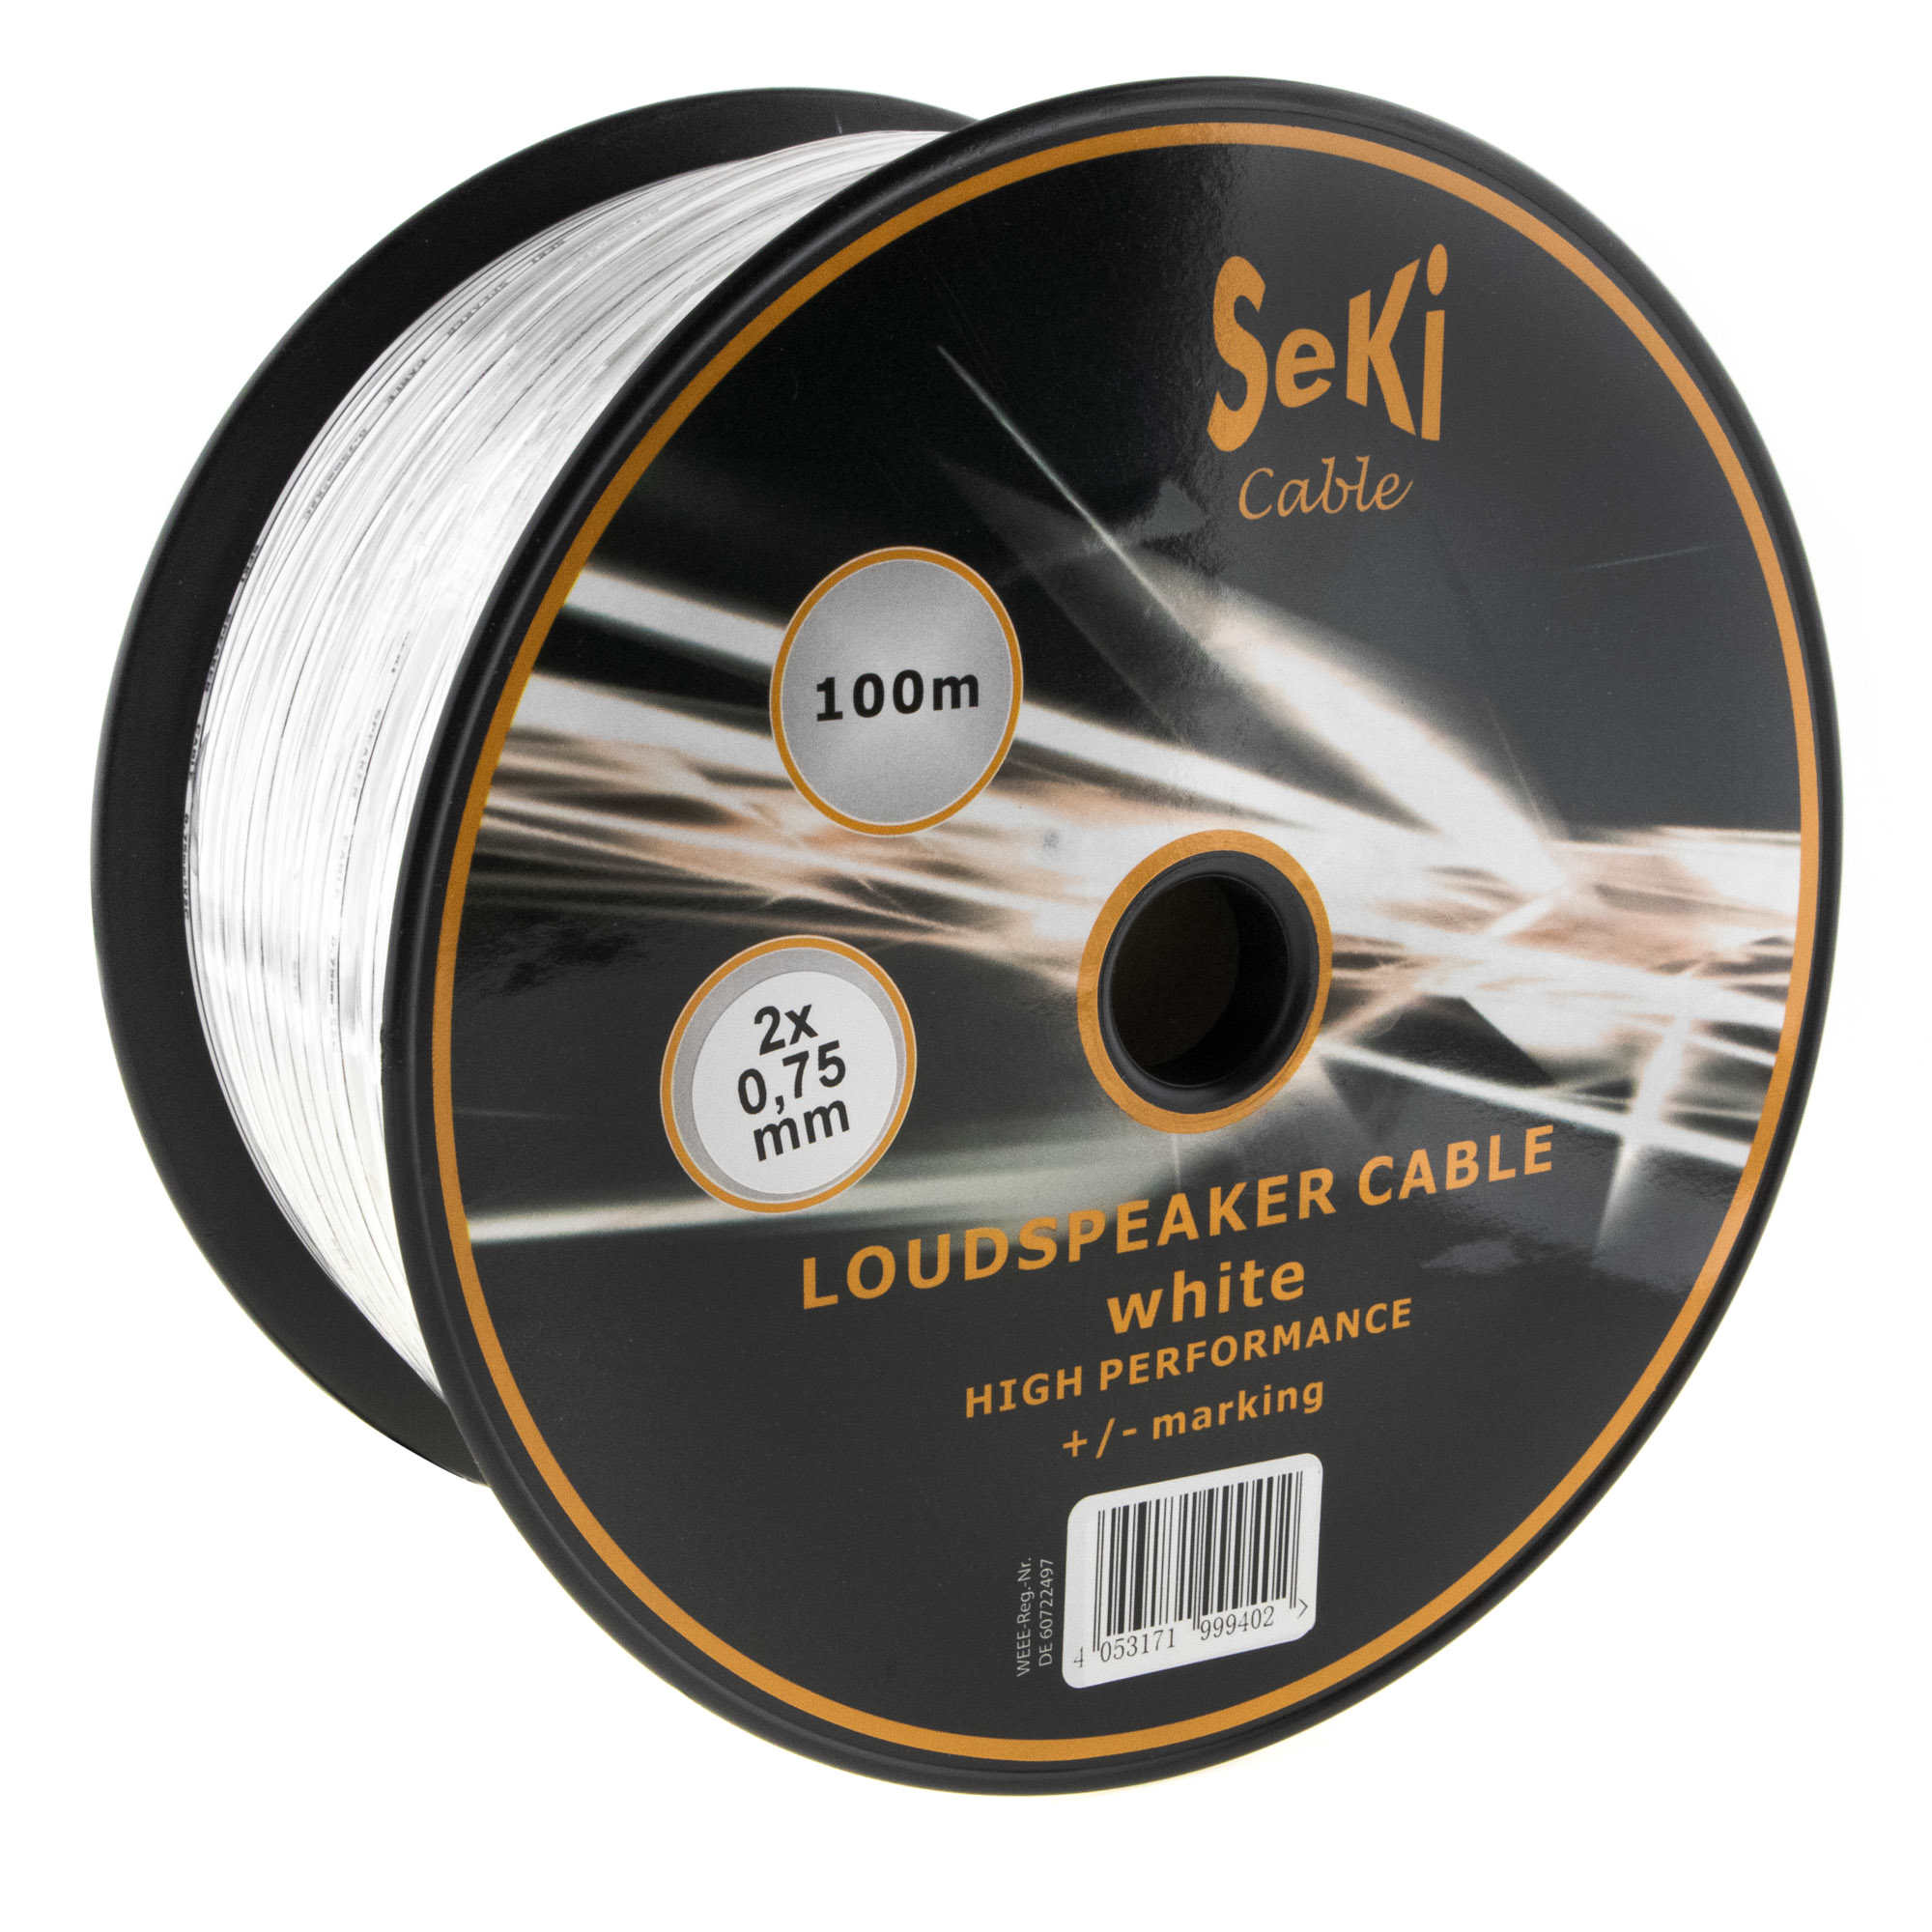 Loudspeaker cable white 100m 0.75mm